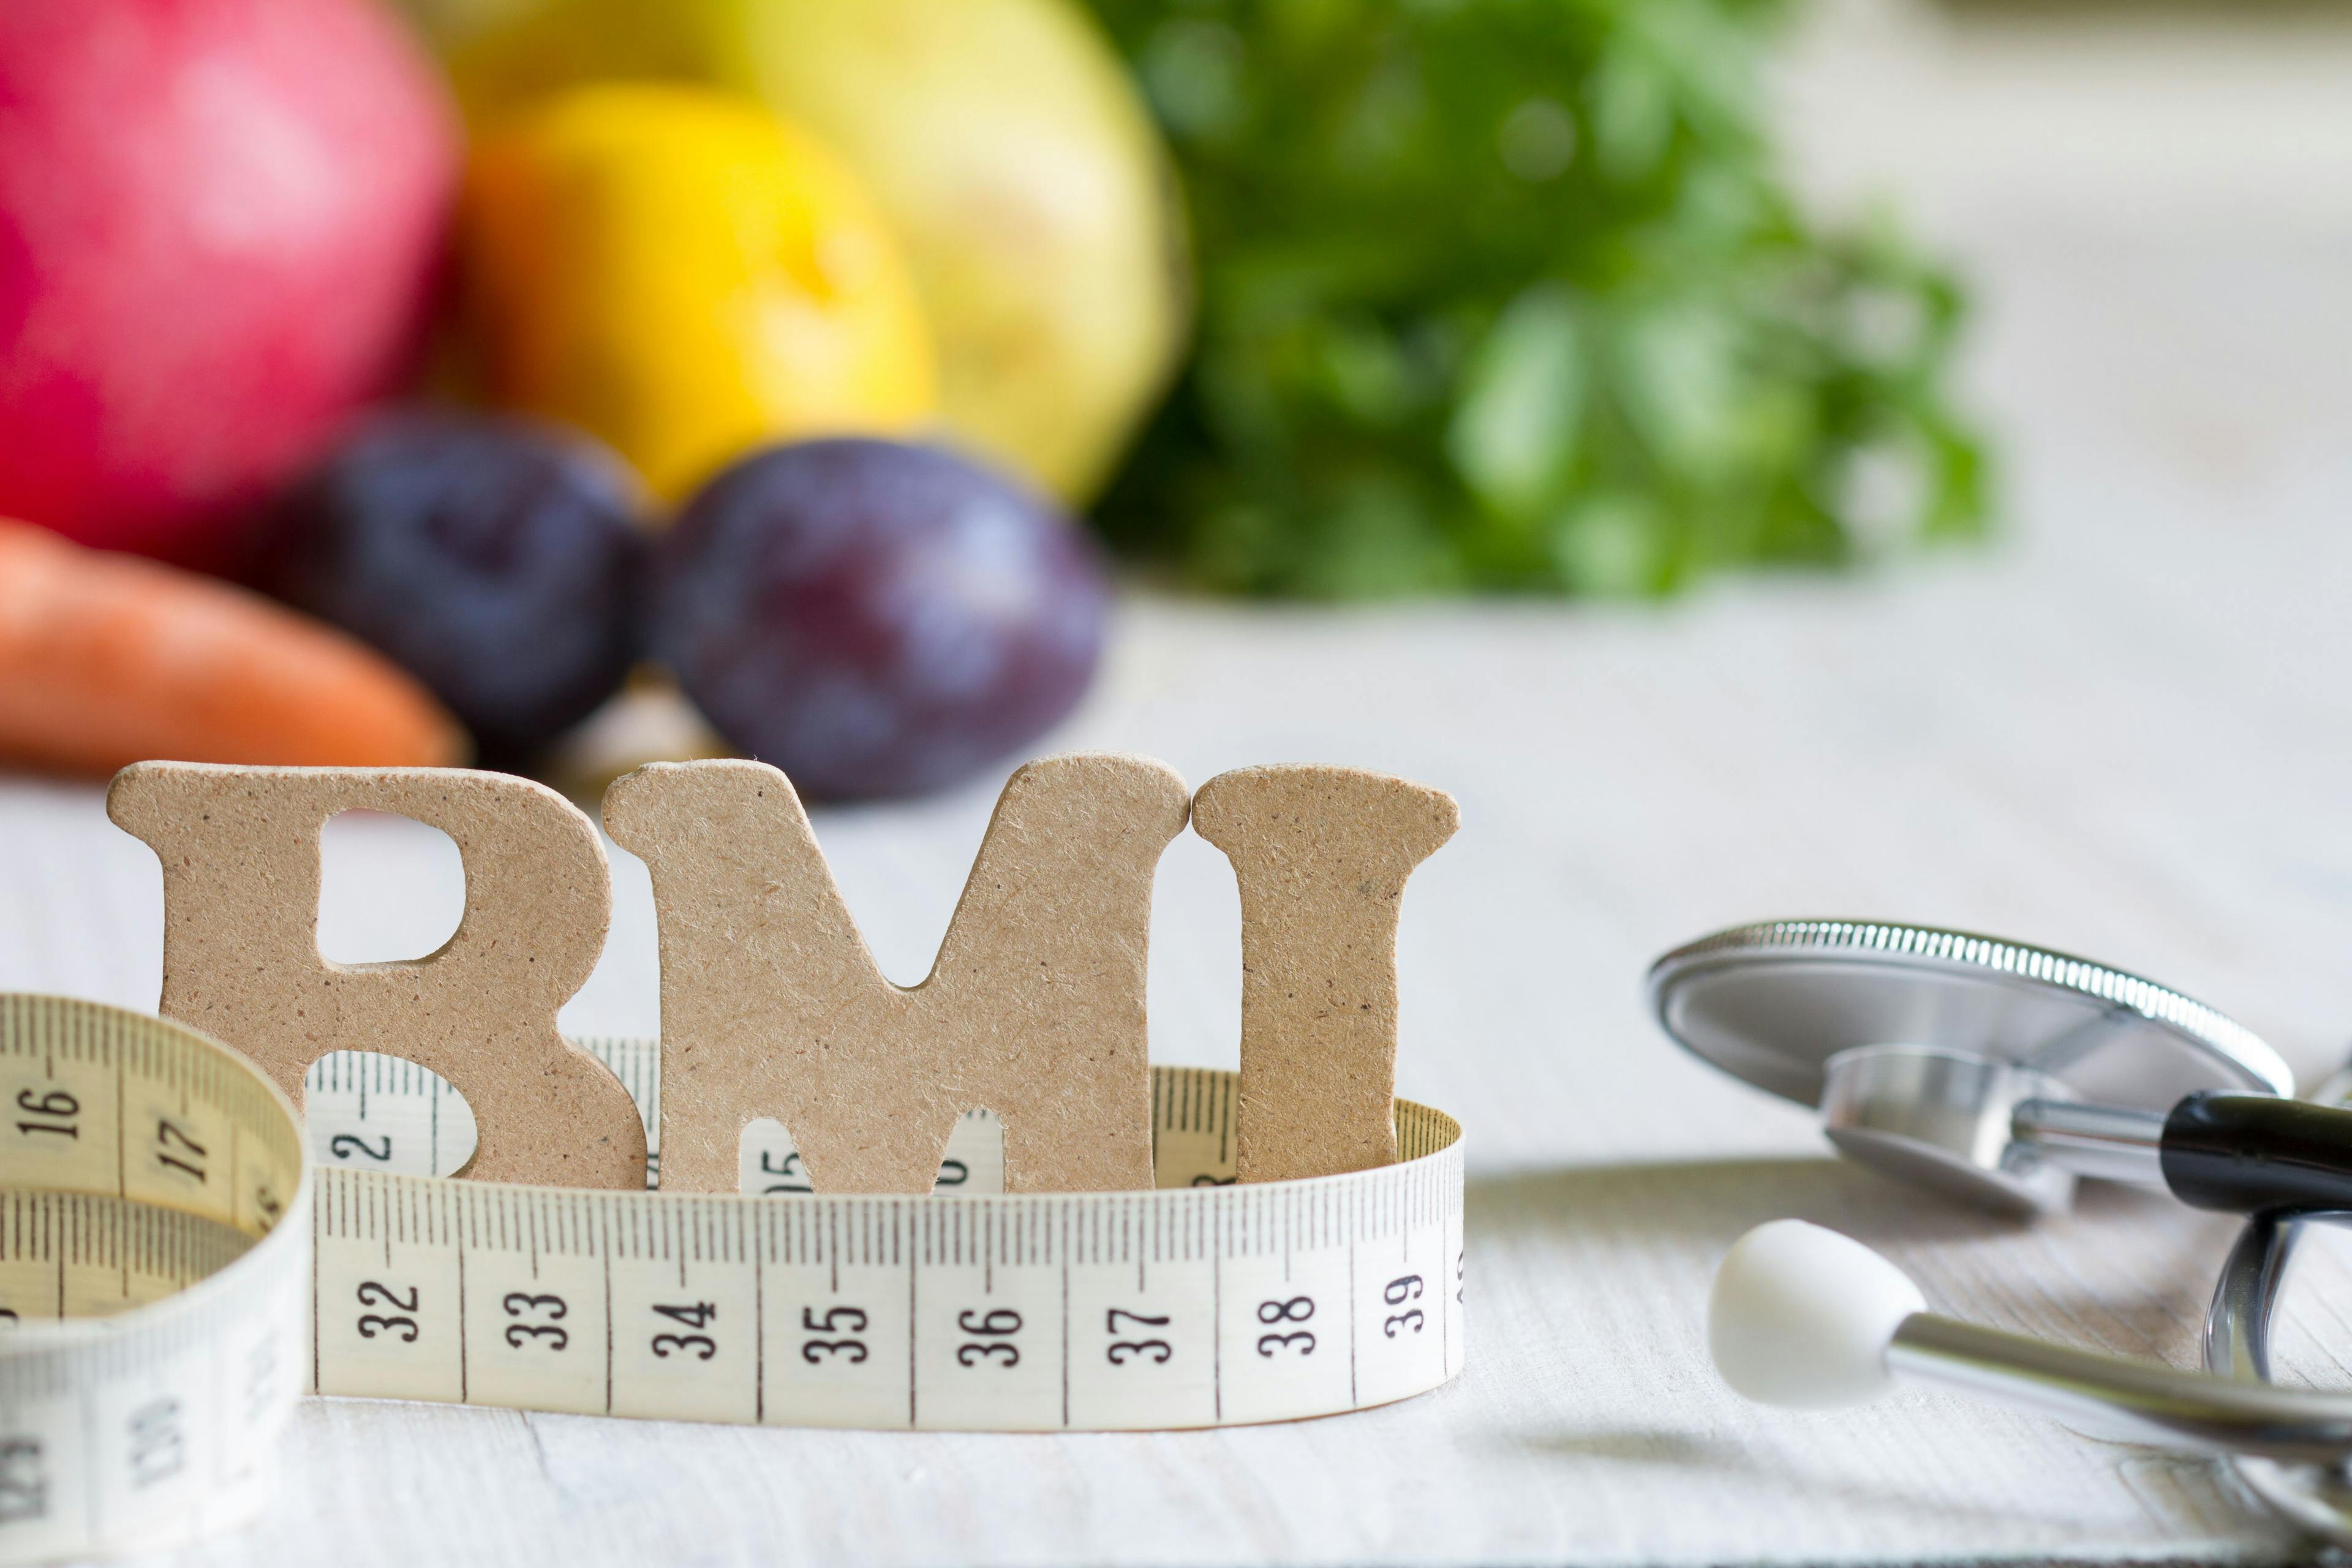 Semaglutide reduces BMI in obese adolescents